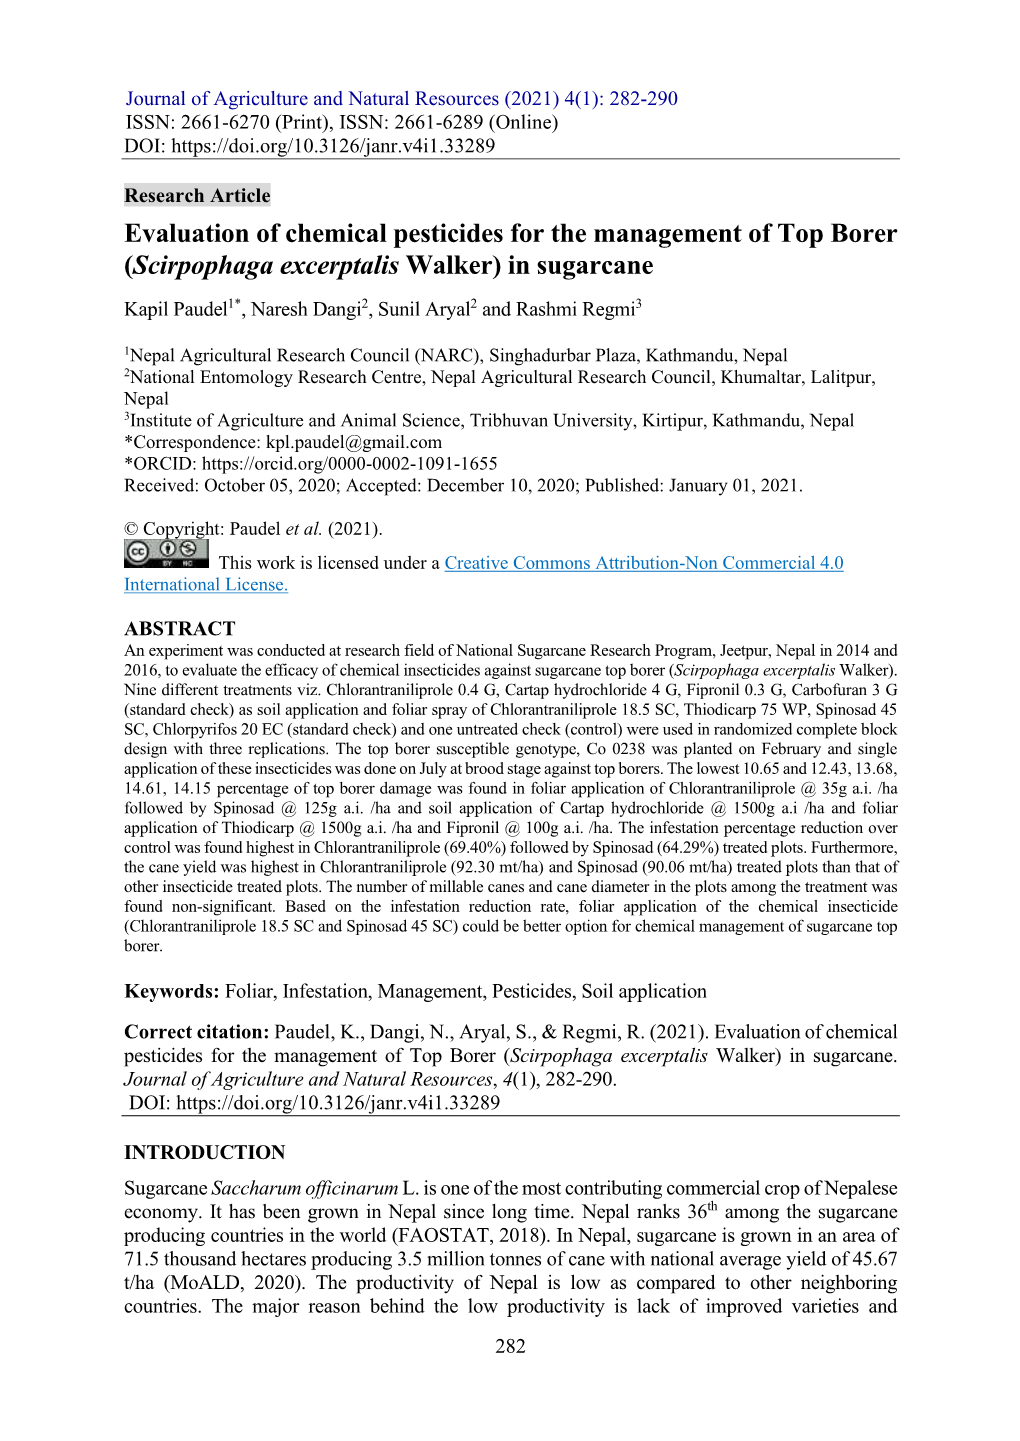 Evaluation of Chemical Pesticides for the Management of Top Borer (Scirpophaga Excerptalis Walker) in Sugarcane